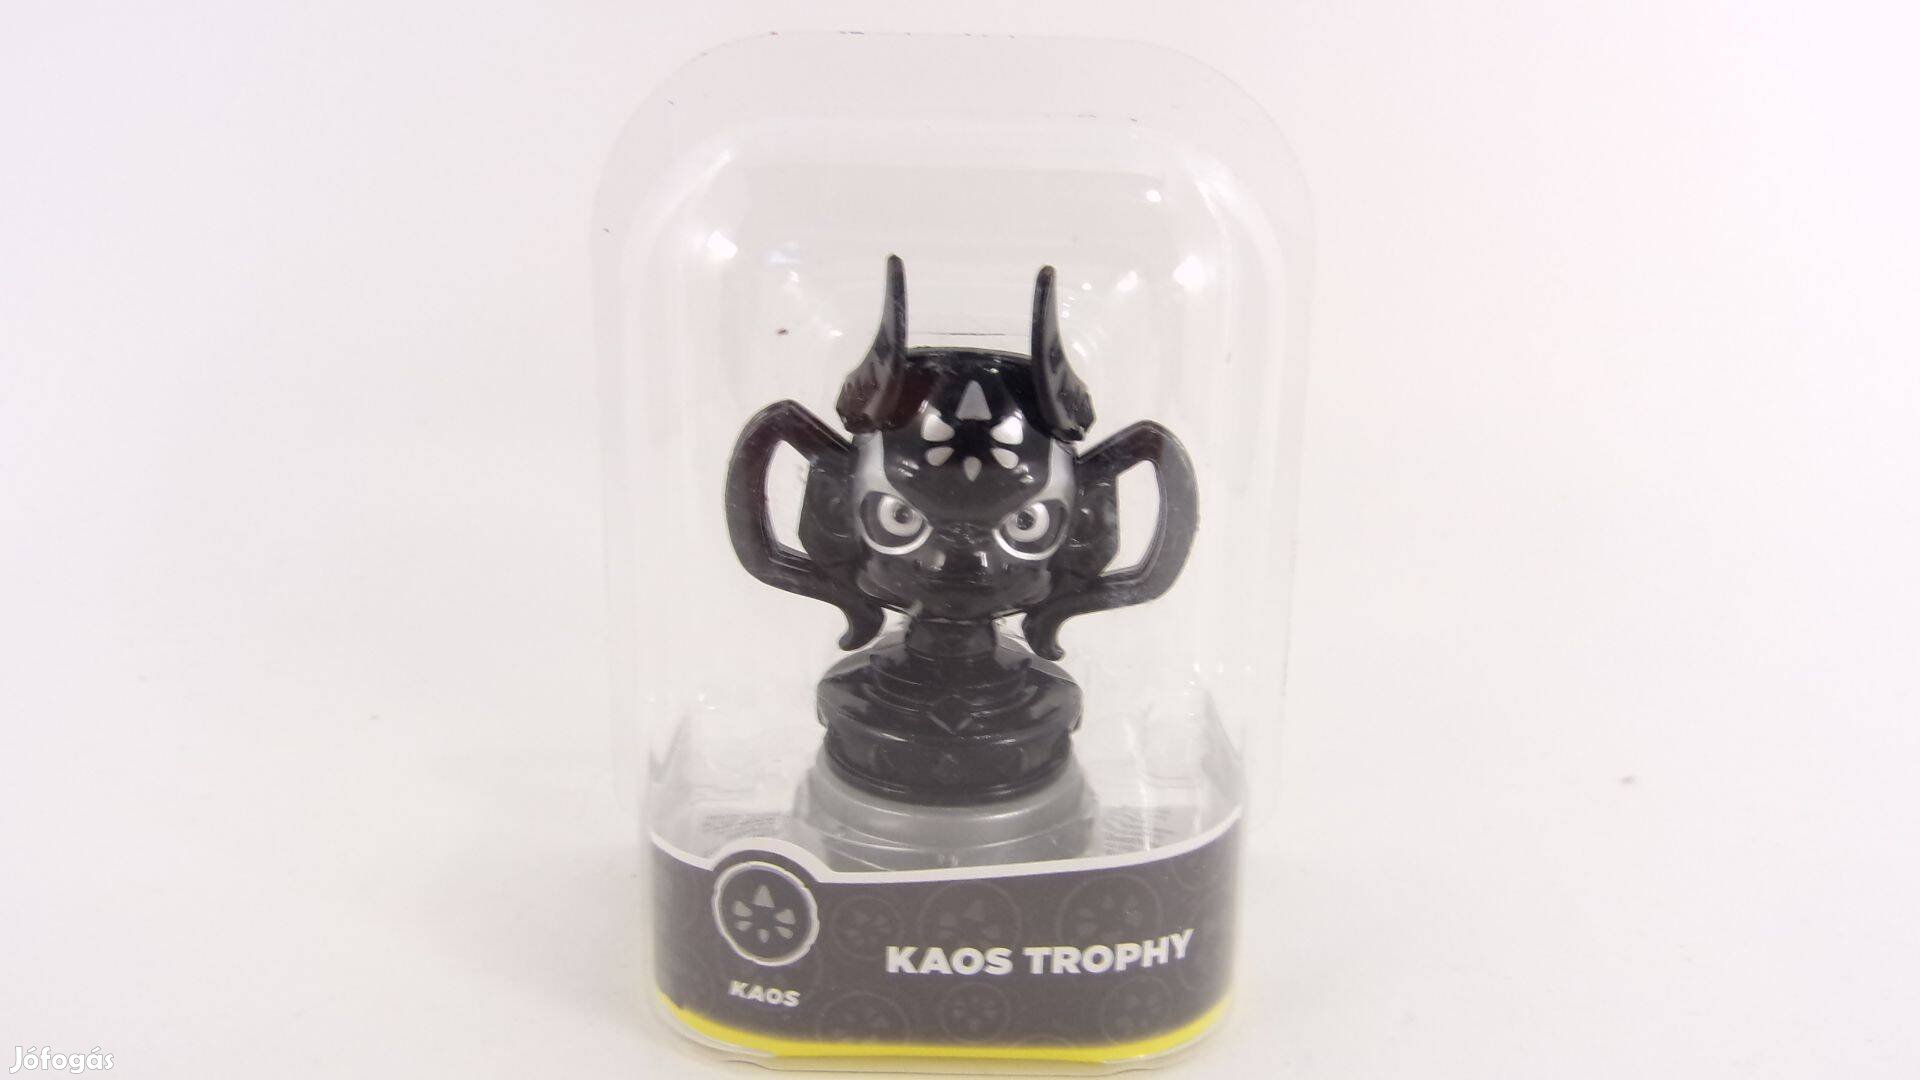 Skylanders Kaos Trophy figura